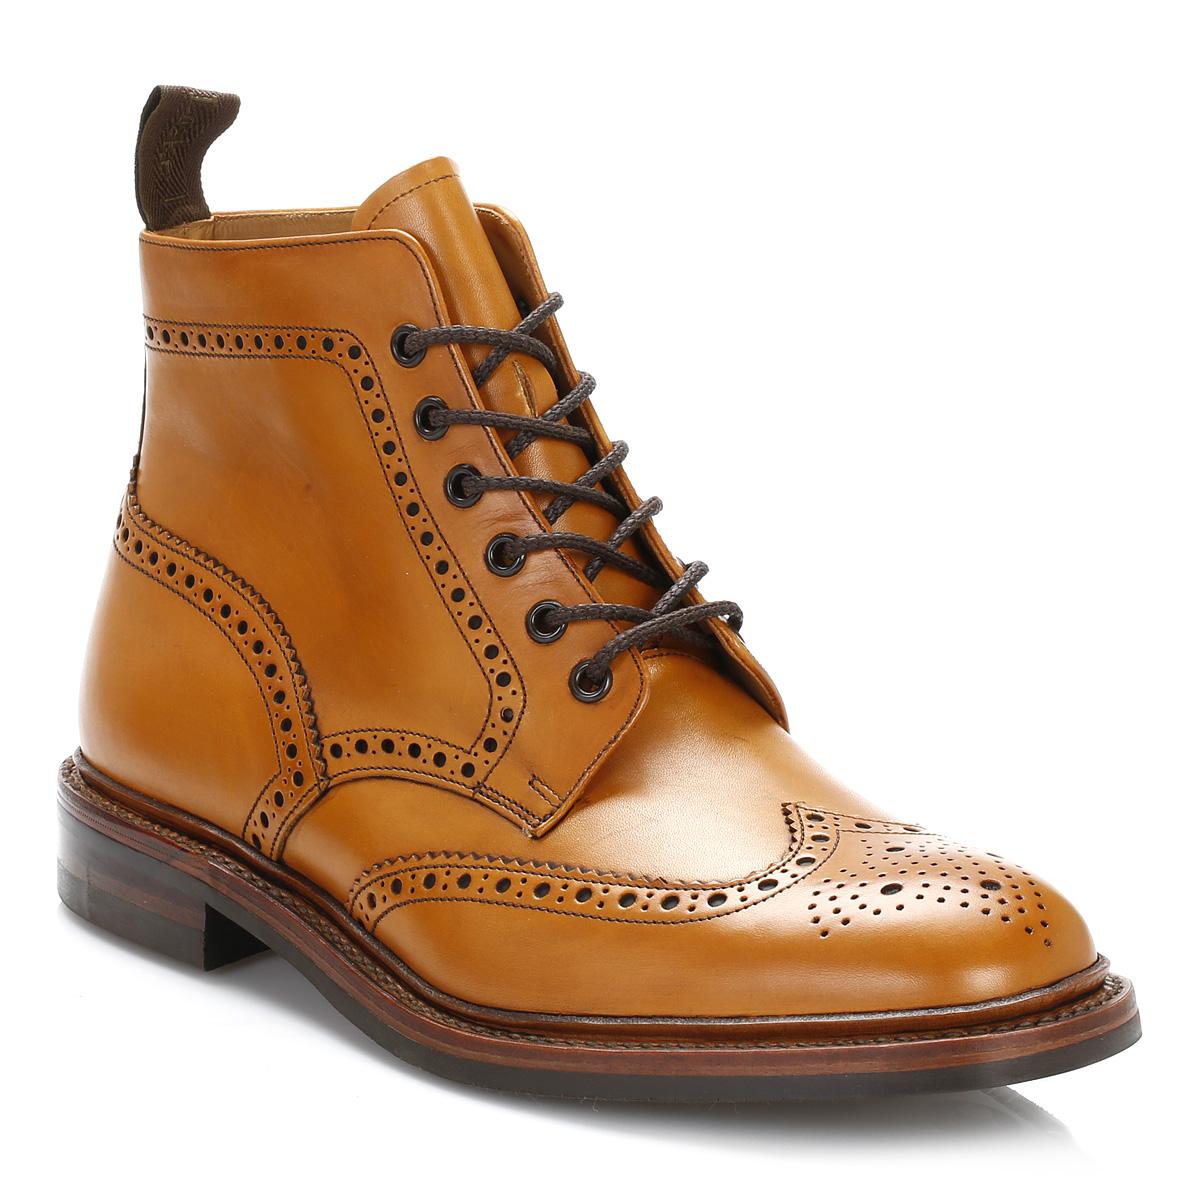 Lyst - Loake Mens Tan Burford Dainite Calf Leather Brogue Boots in ...